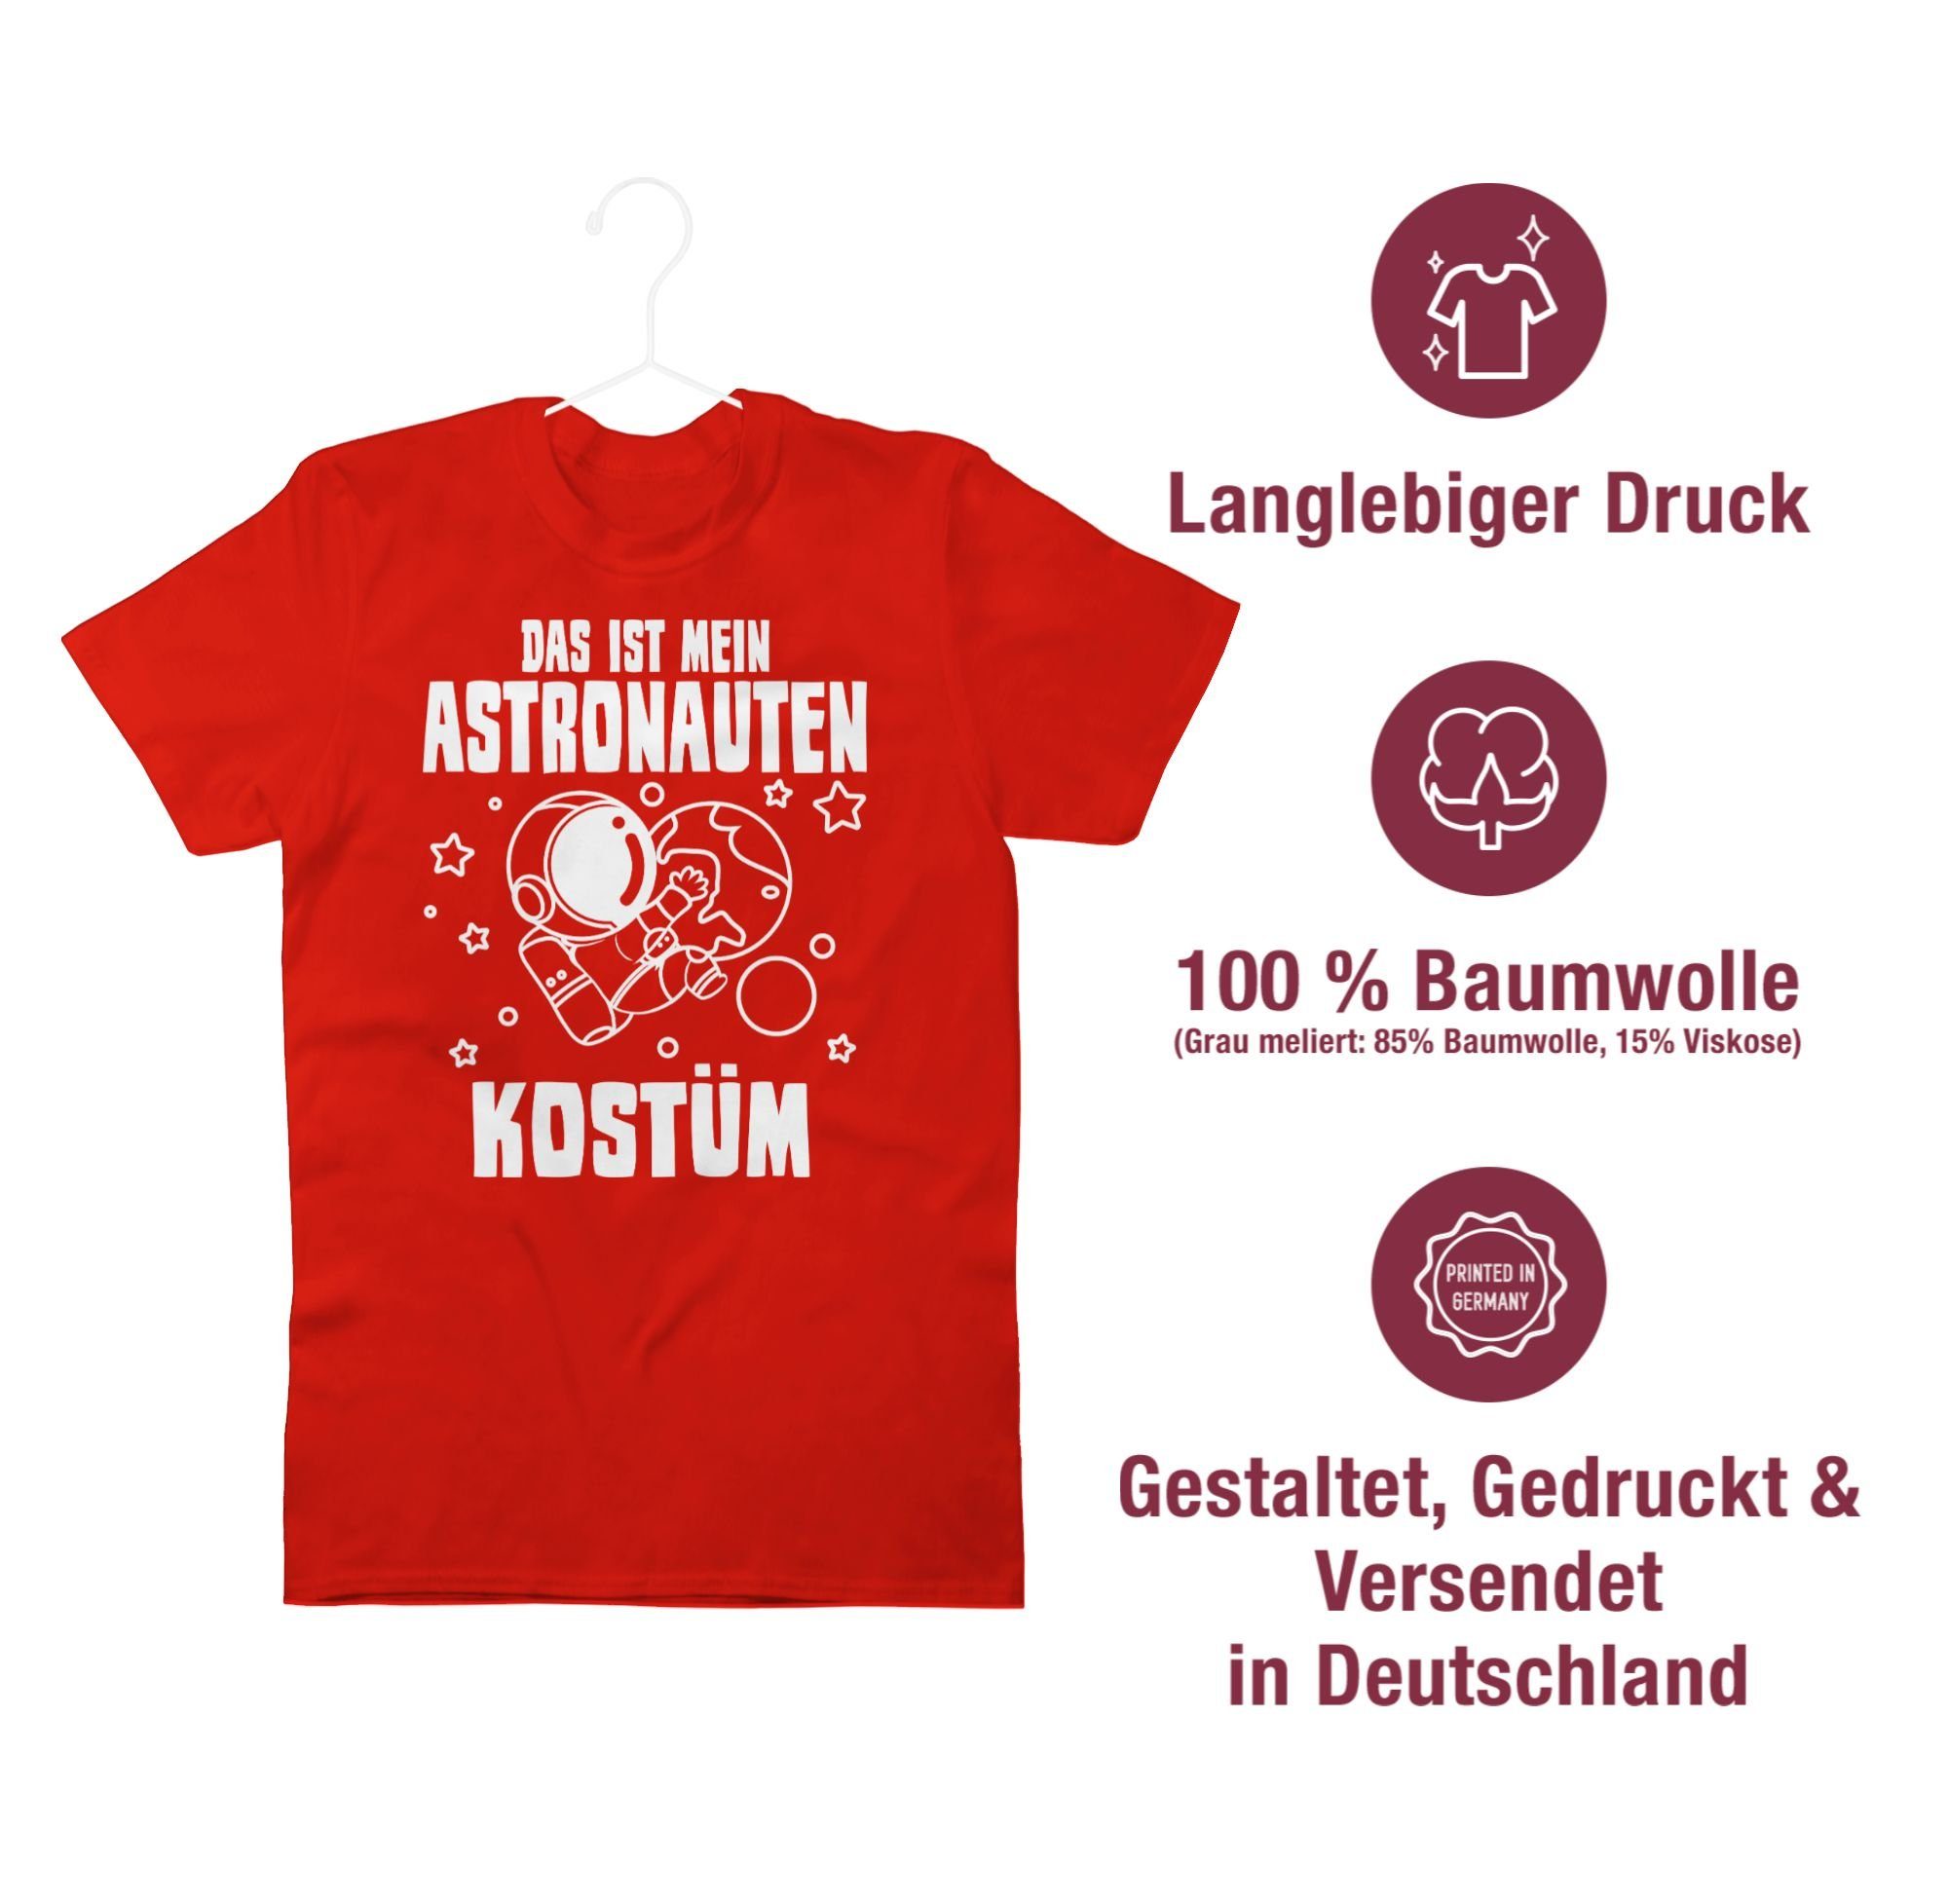 Karneval Rot Astronautenkostüm ist - Shirtracer Weltraum Astronaut Das 3 Outfit mein Astronauten Kostüm T-Shirt